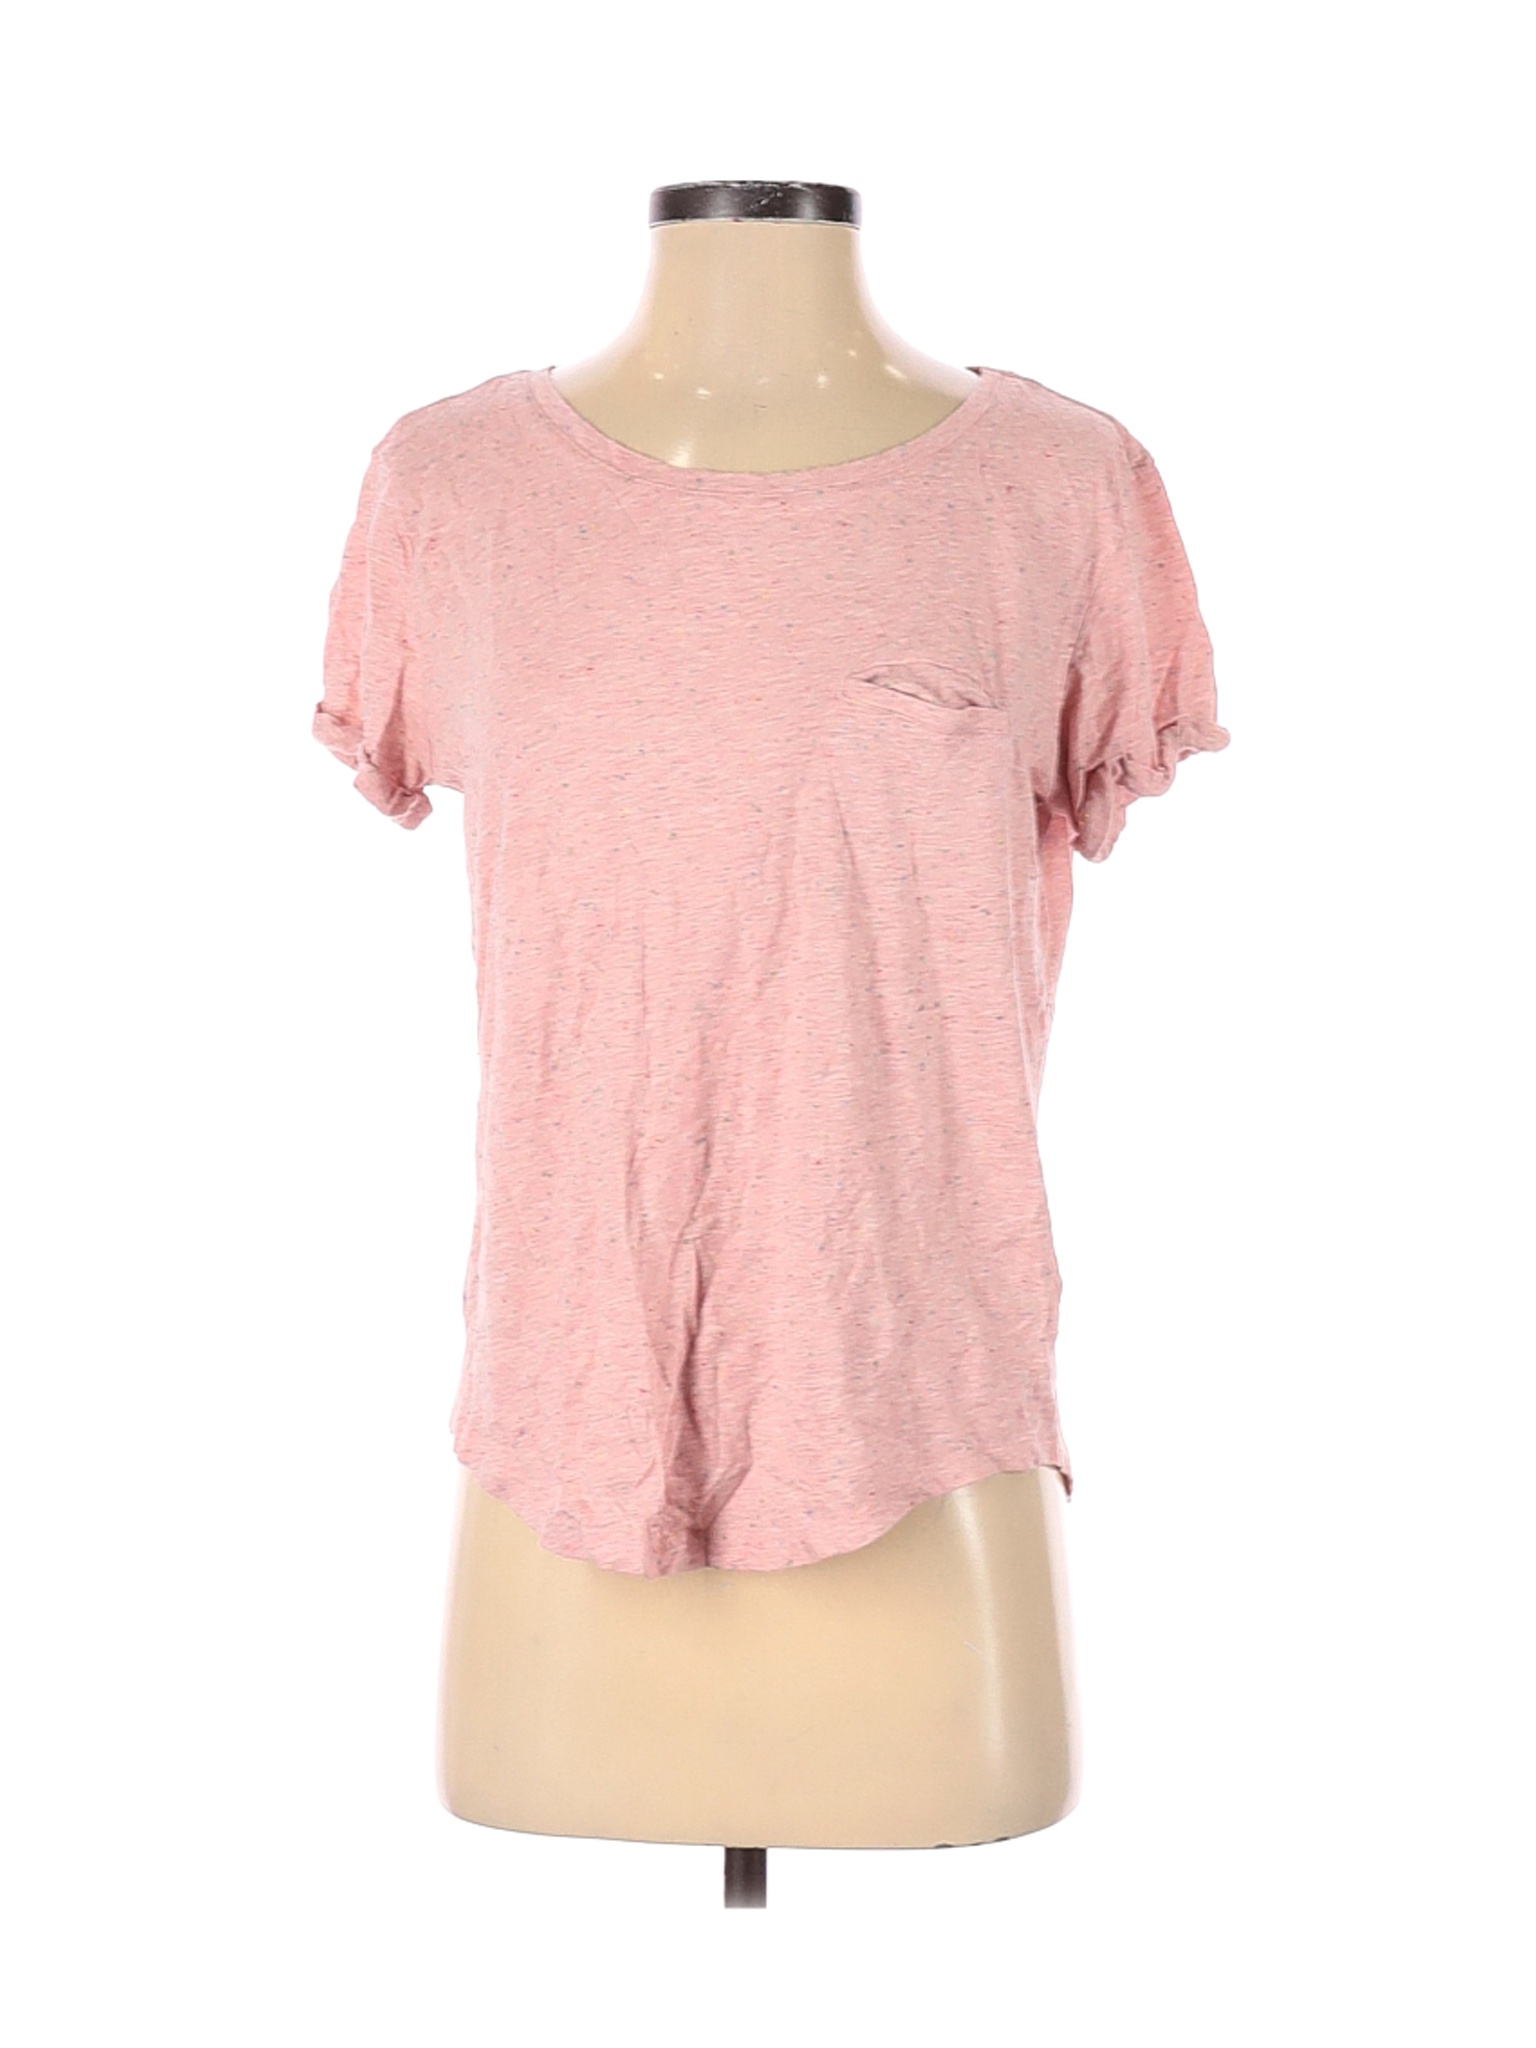 Basics Women Pink Short Sleeve T-Shirt S | eBay